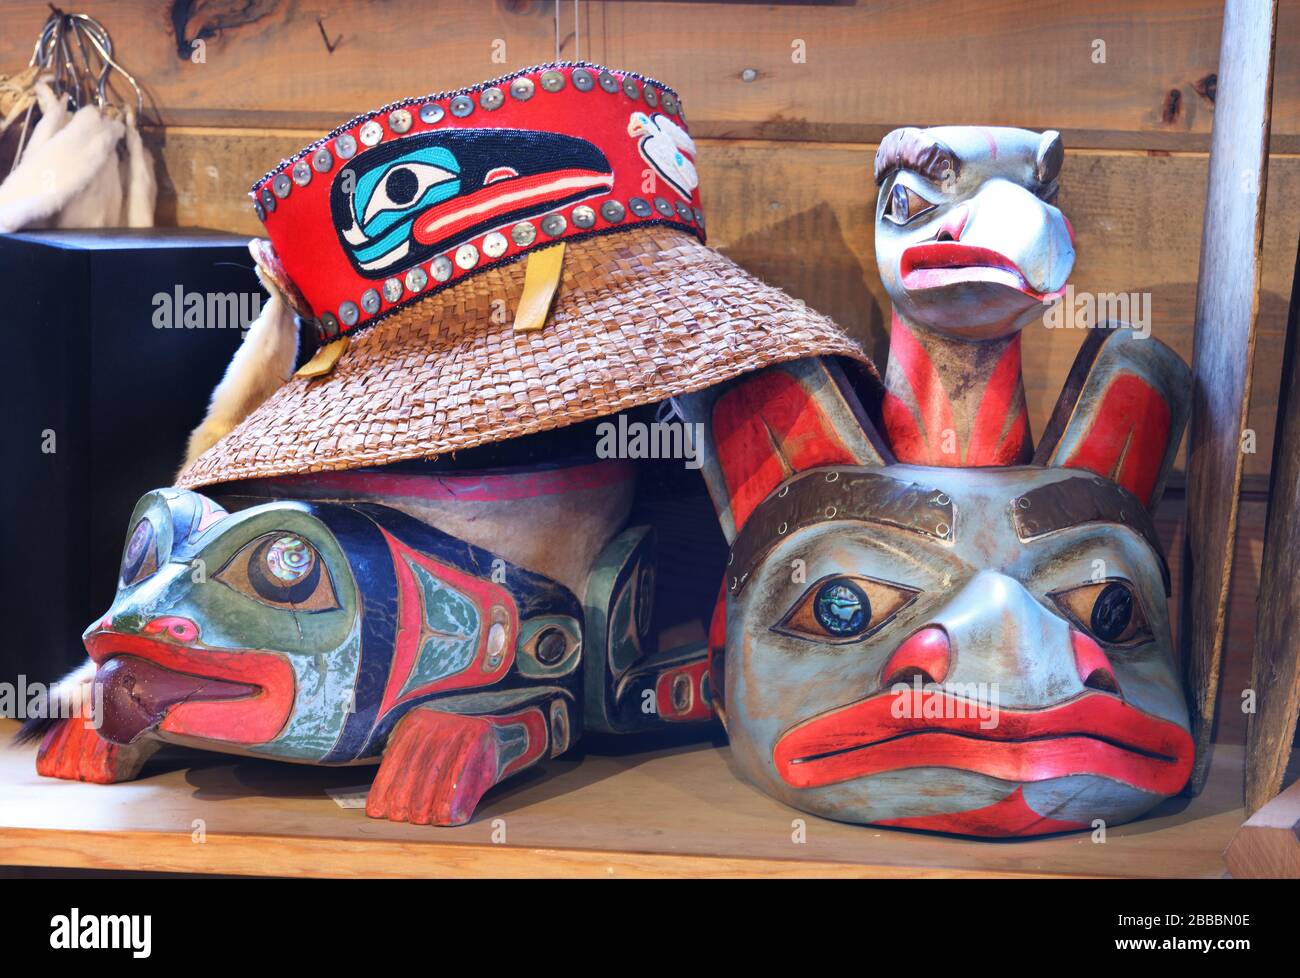 Sombrero de paja de estilo Haida sobre una máscara de frente de rana inspirada en el Tlingi. A la derecha hay una máscara de frente de oso inspirada en Tlingit en la tienda de arte nativo Deil'e.ann & Tlingit Botanicals, Icy Strait Point, Alaska, EE.UU Foto de stock